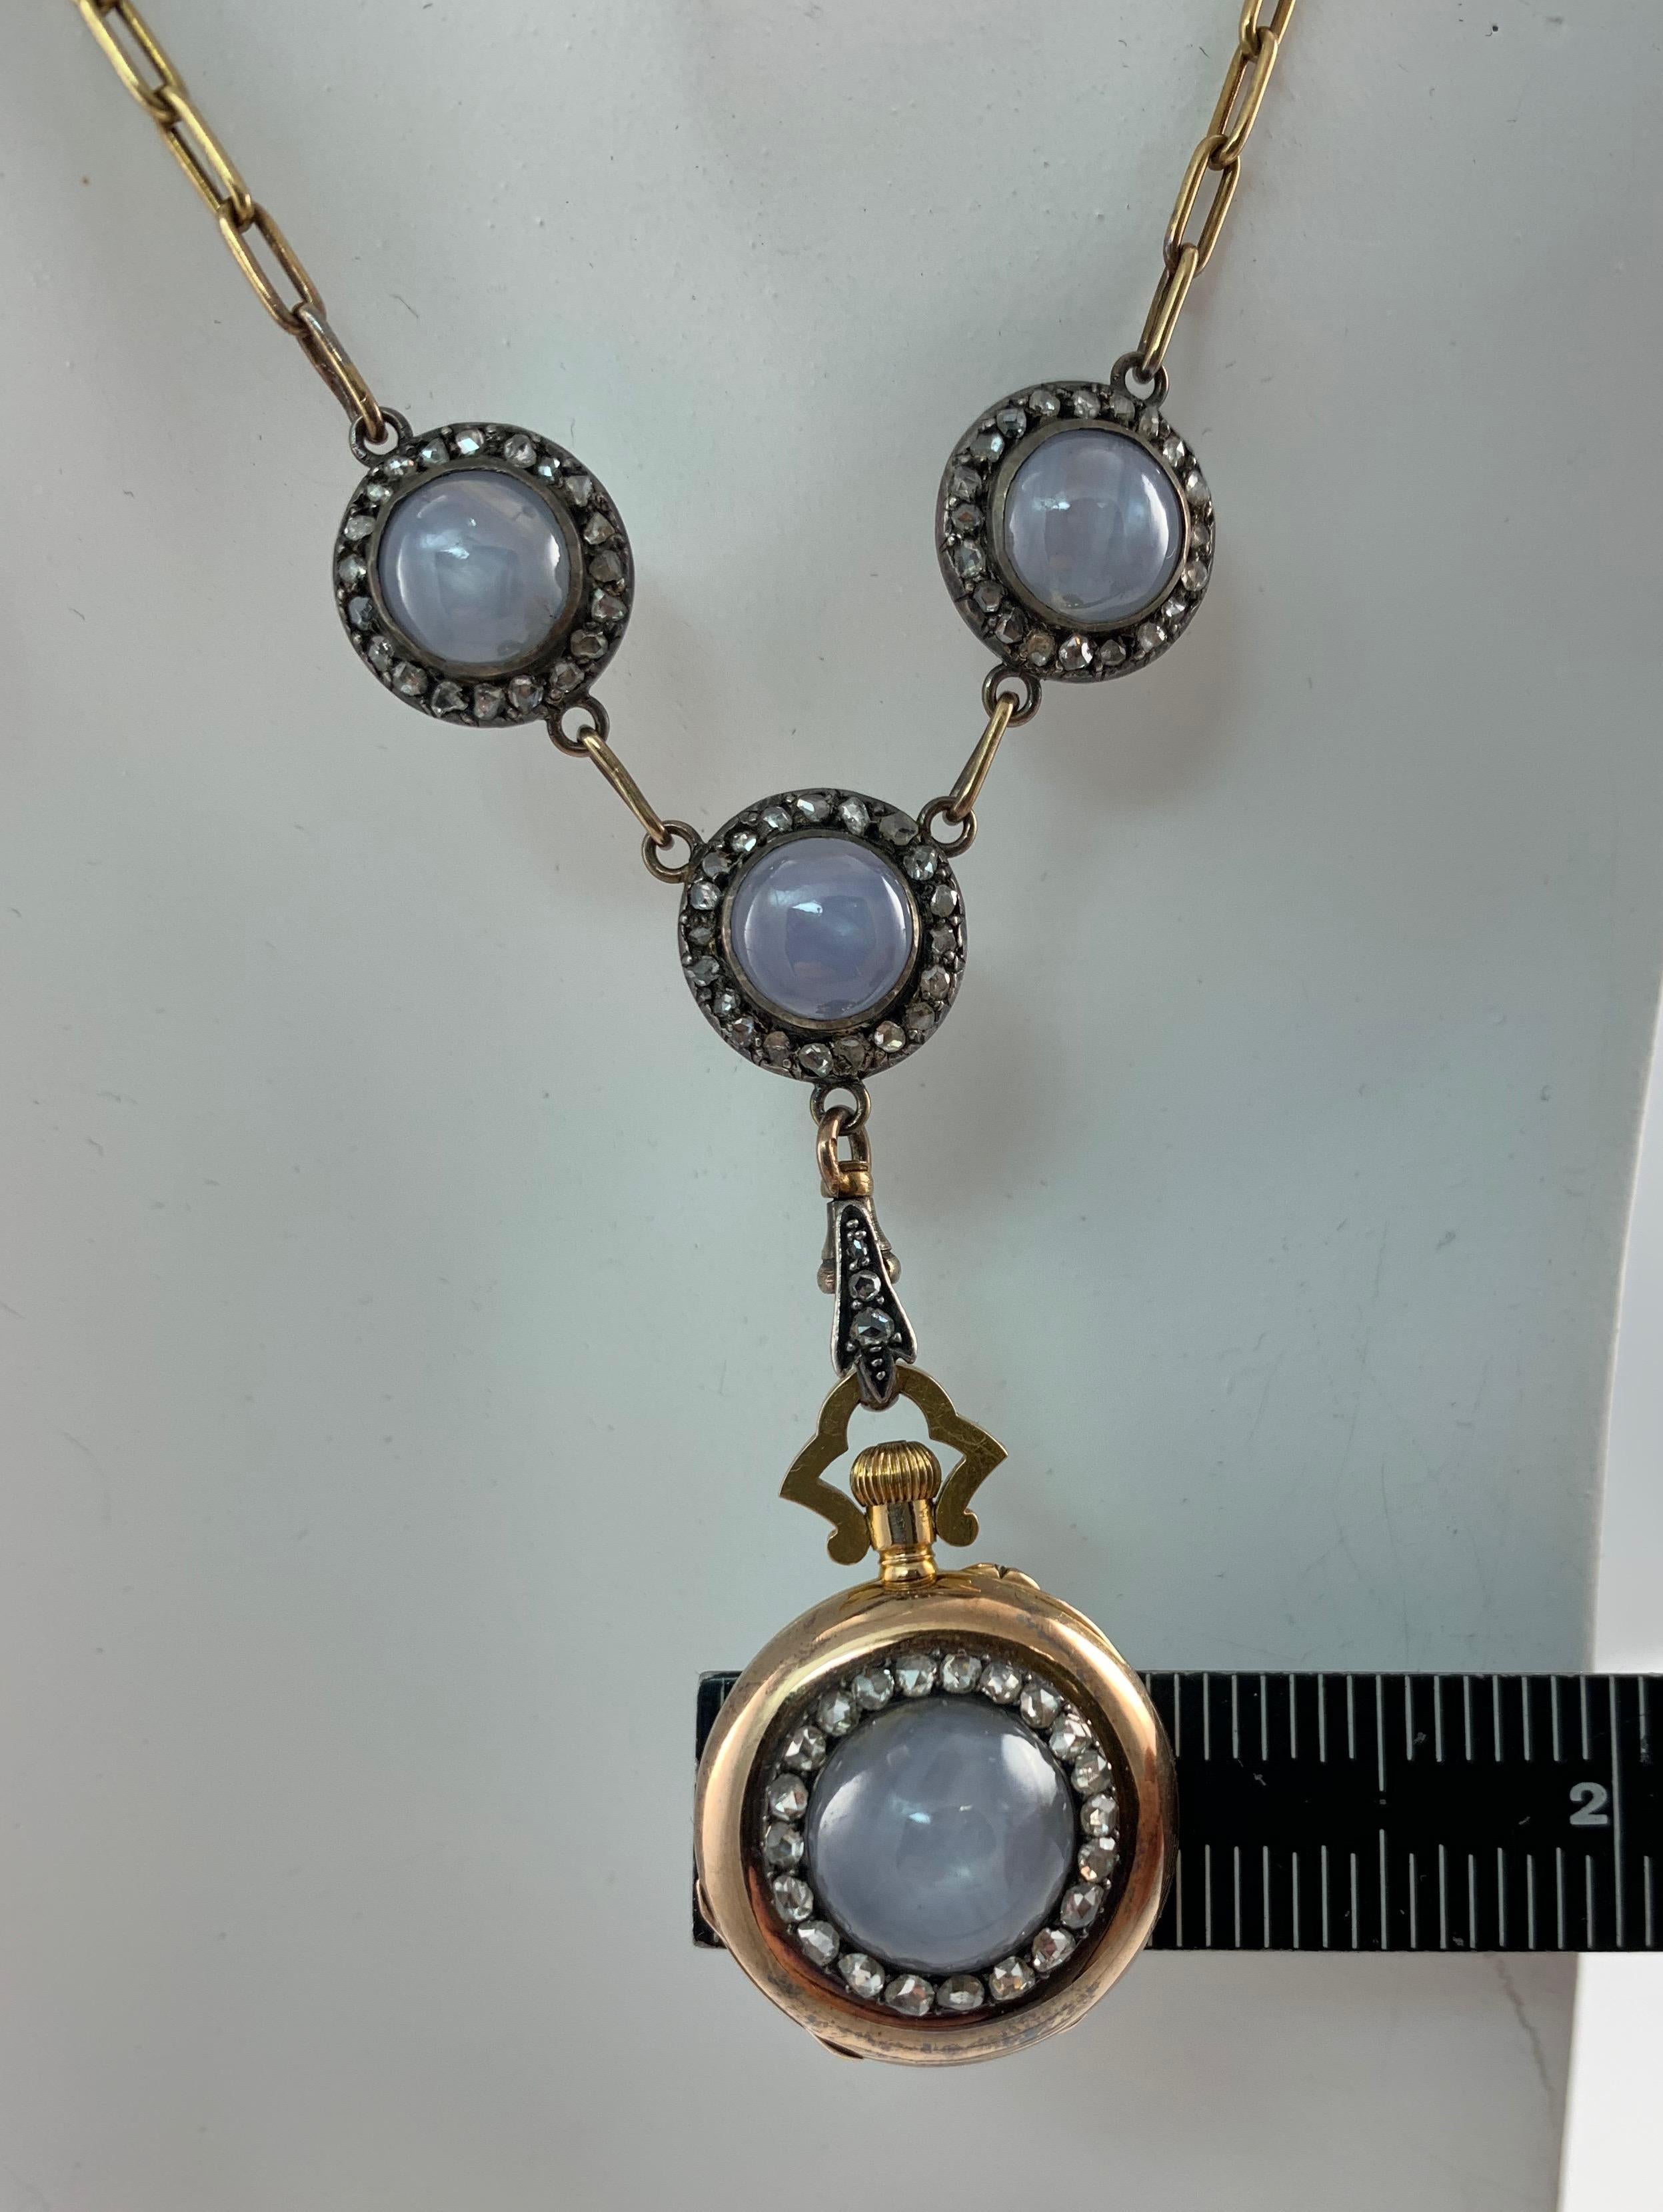 Original Boucheron Star Sapphire and Diamond Gold Necklace circa 1900 with Clock For Sale 1